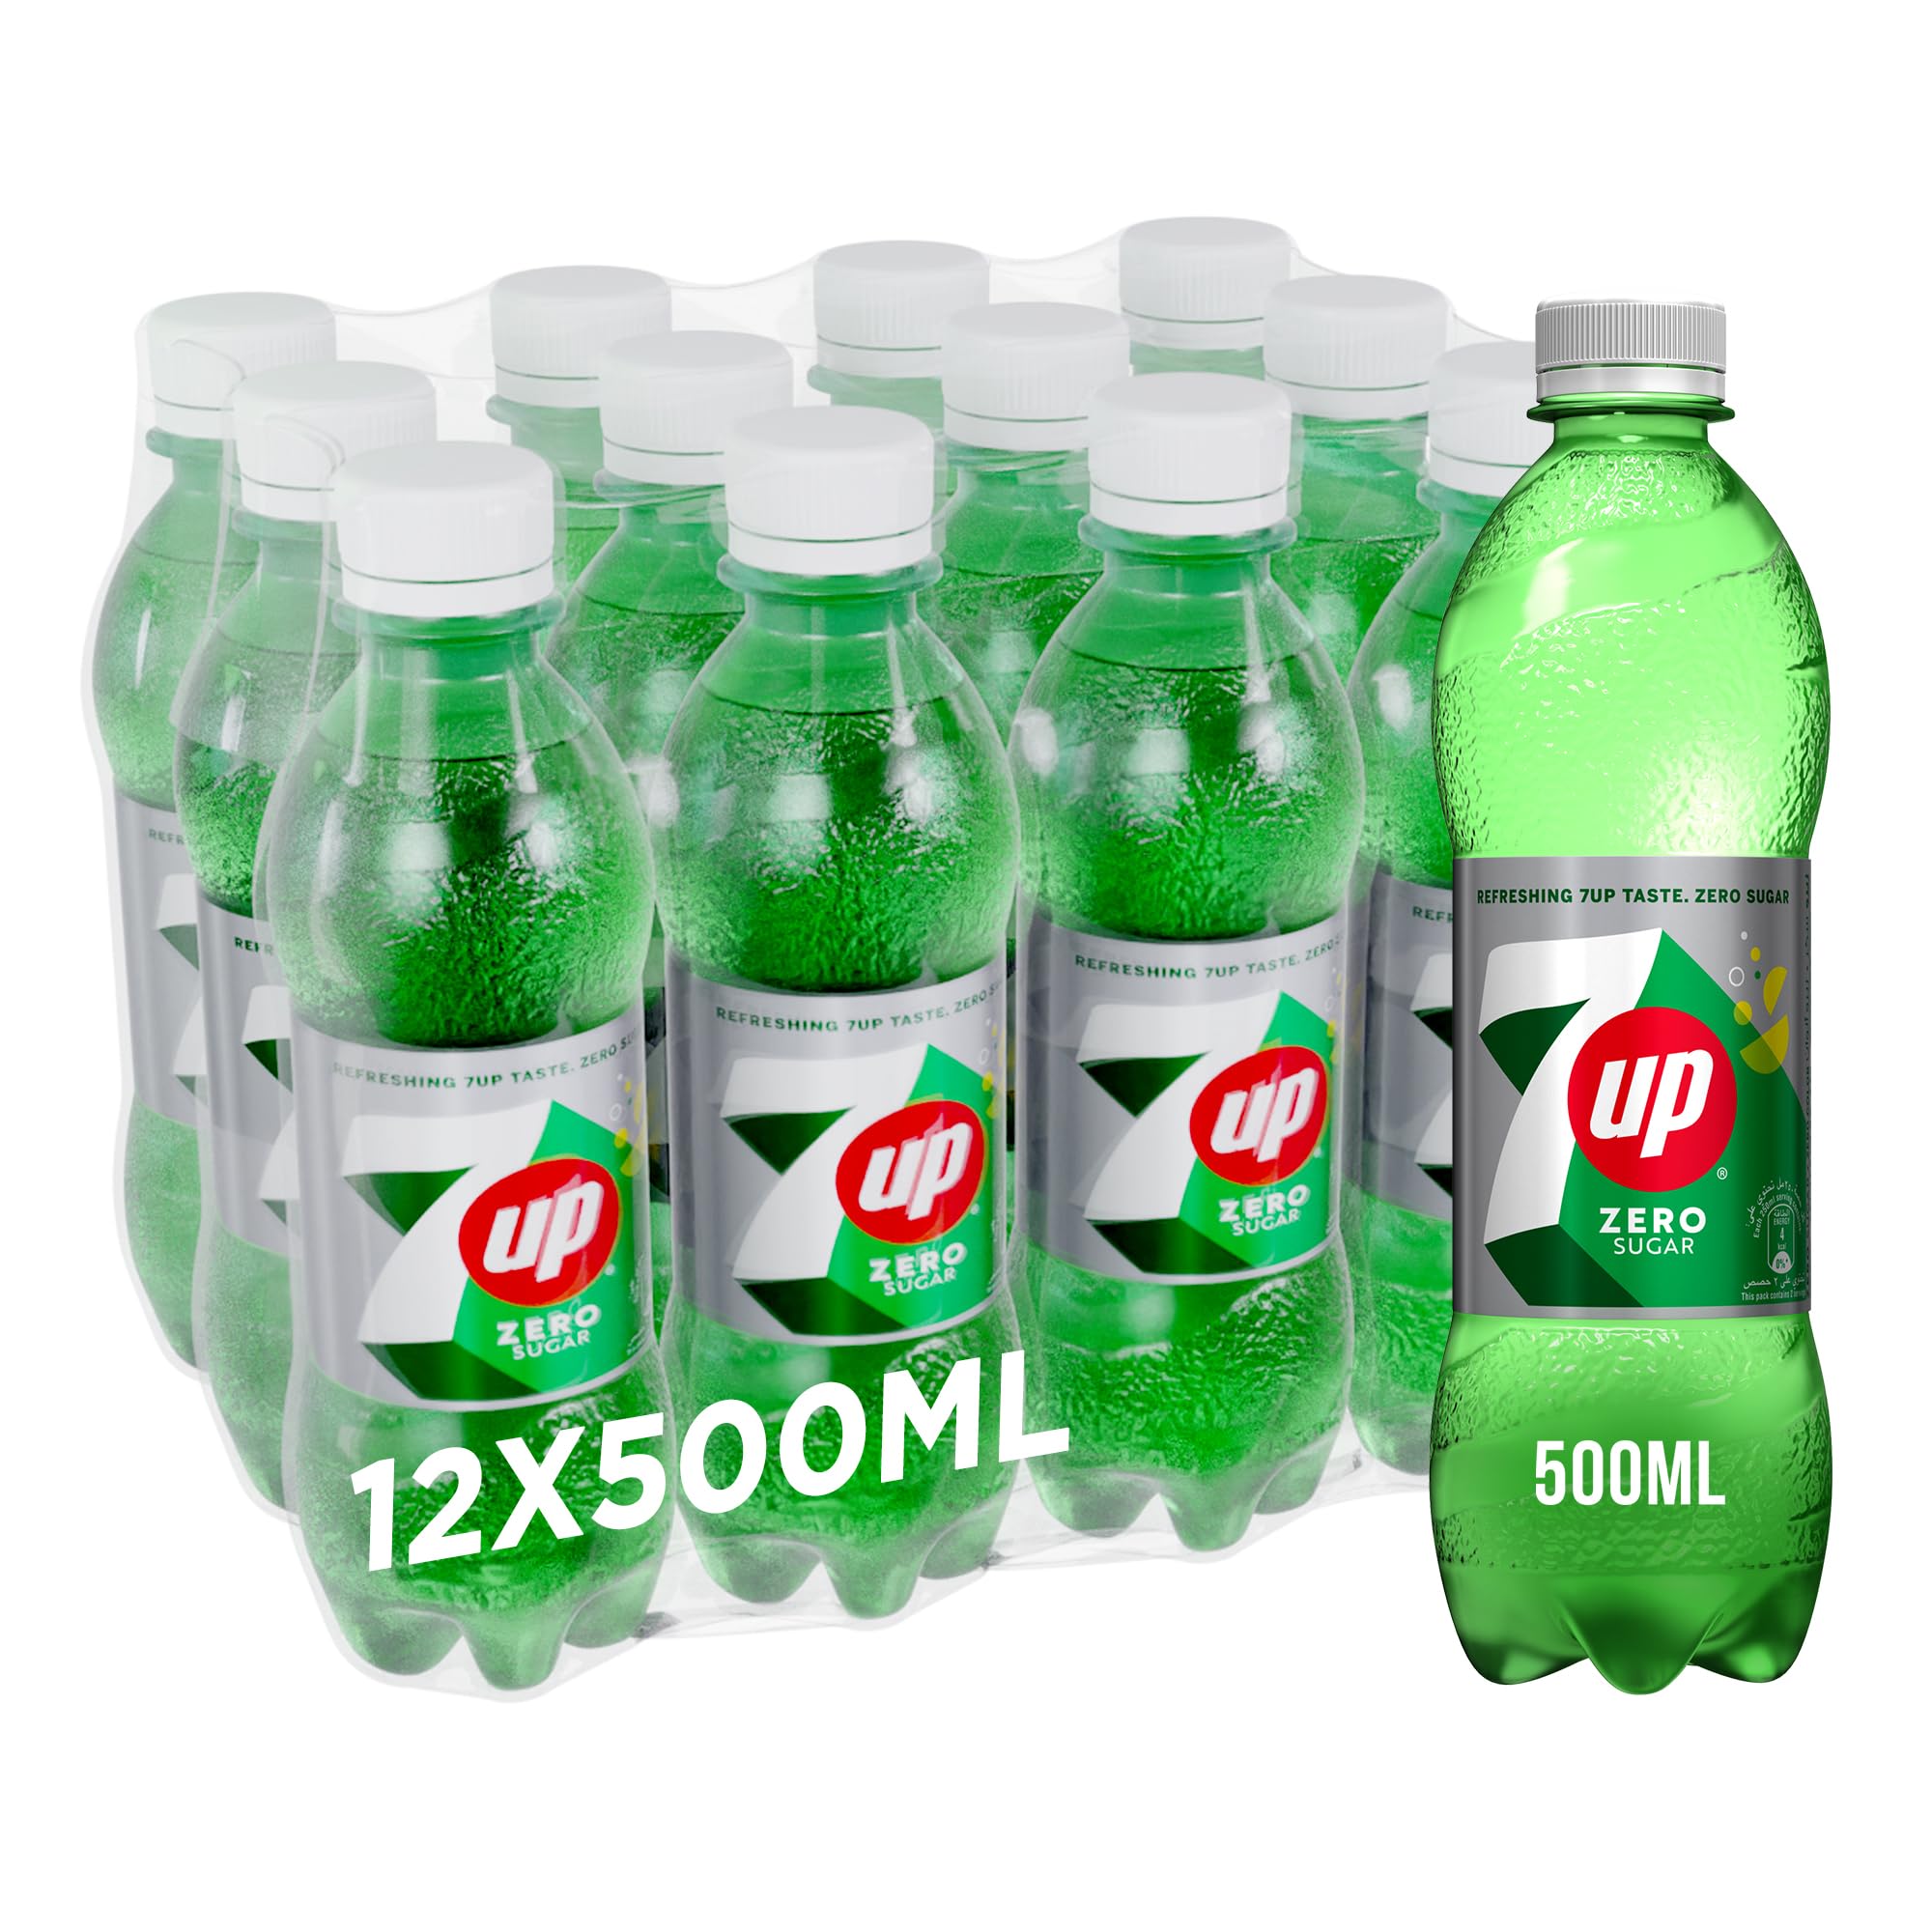 7Up Zero Bottle - 500ml Case of 12